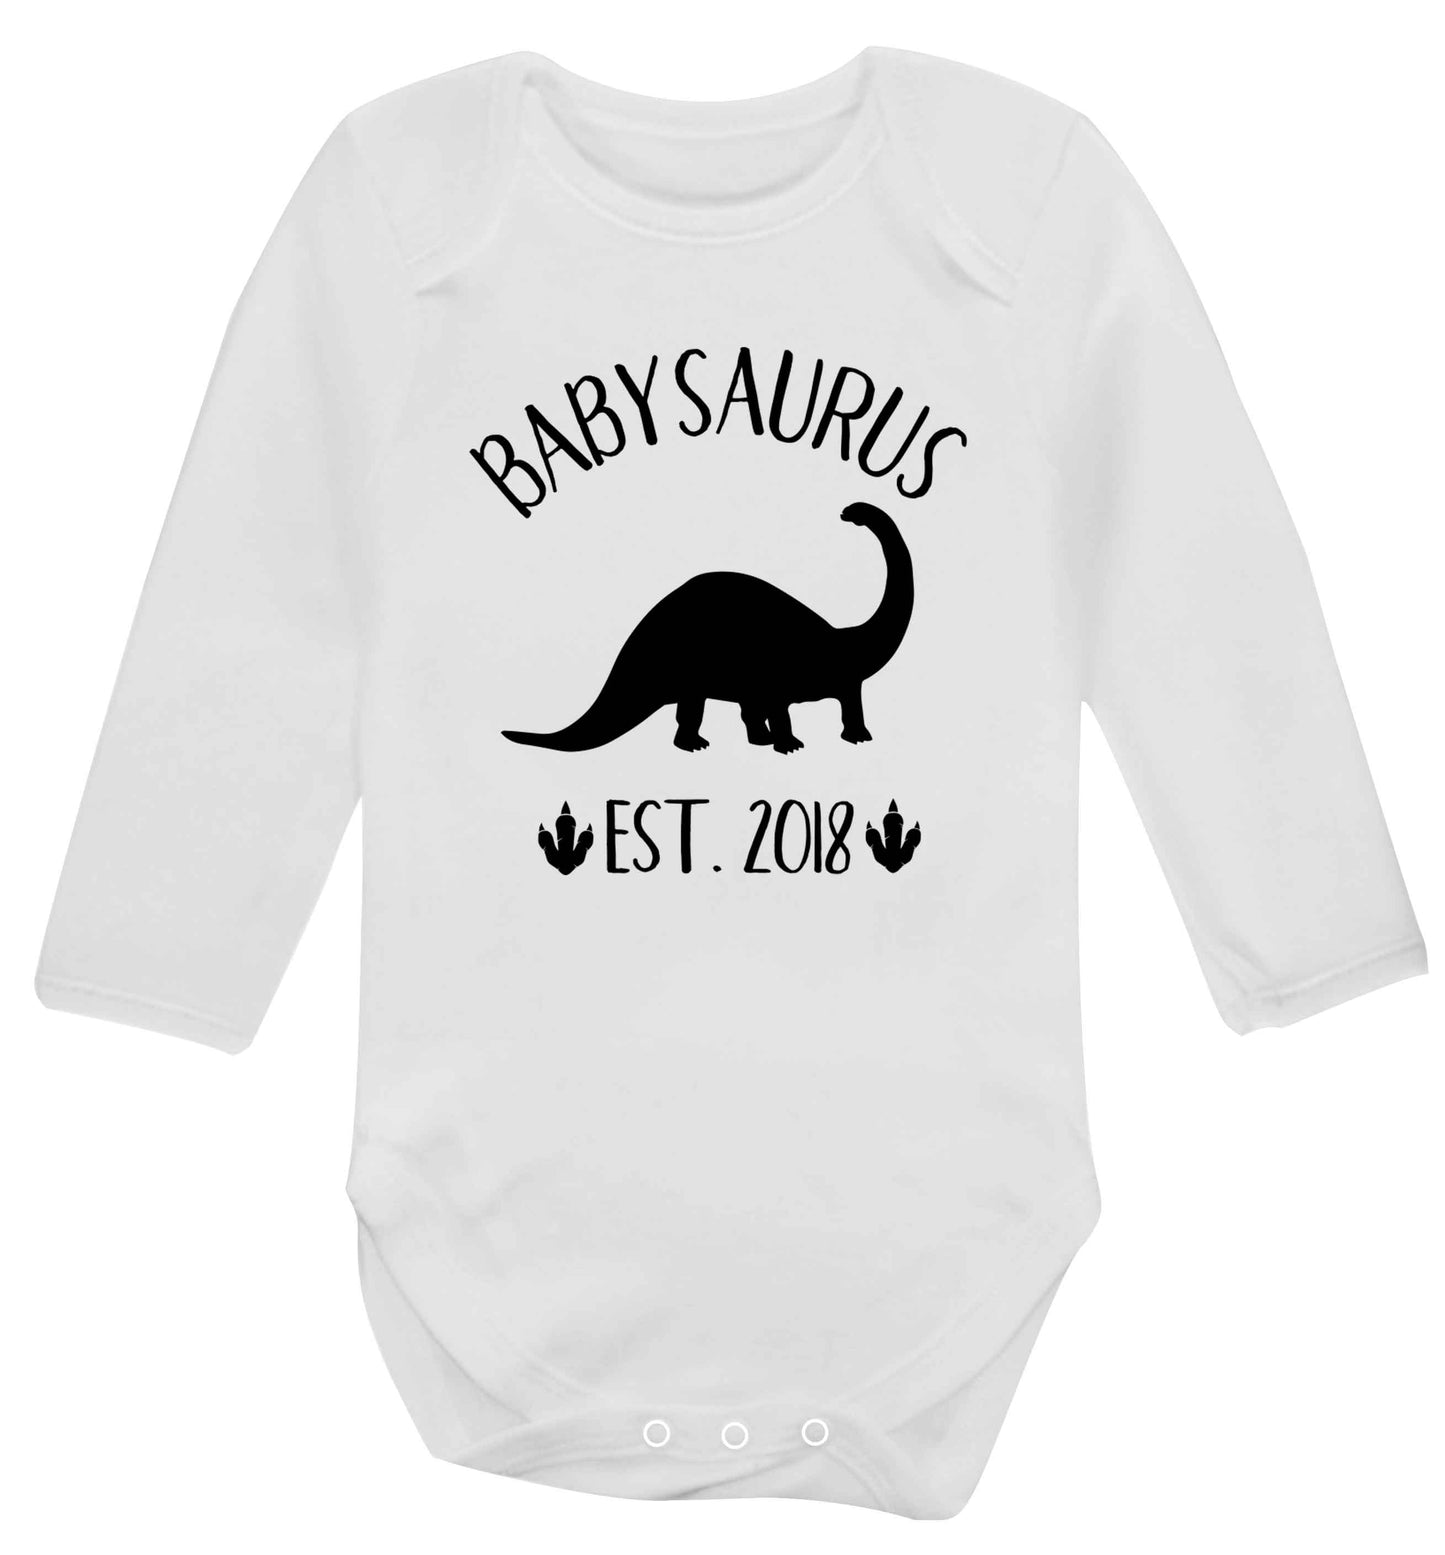 Personalised babysaurus since (custom date) Baby Vest long sleeved white 6-12 months